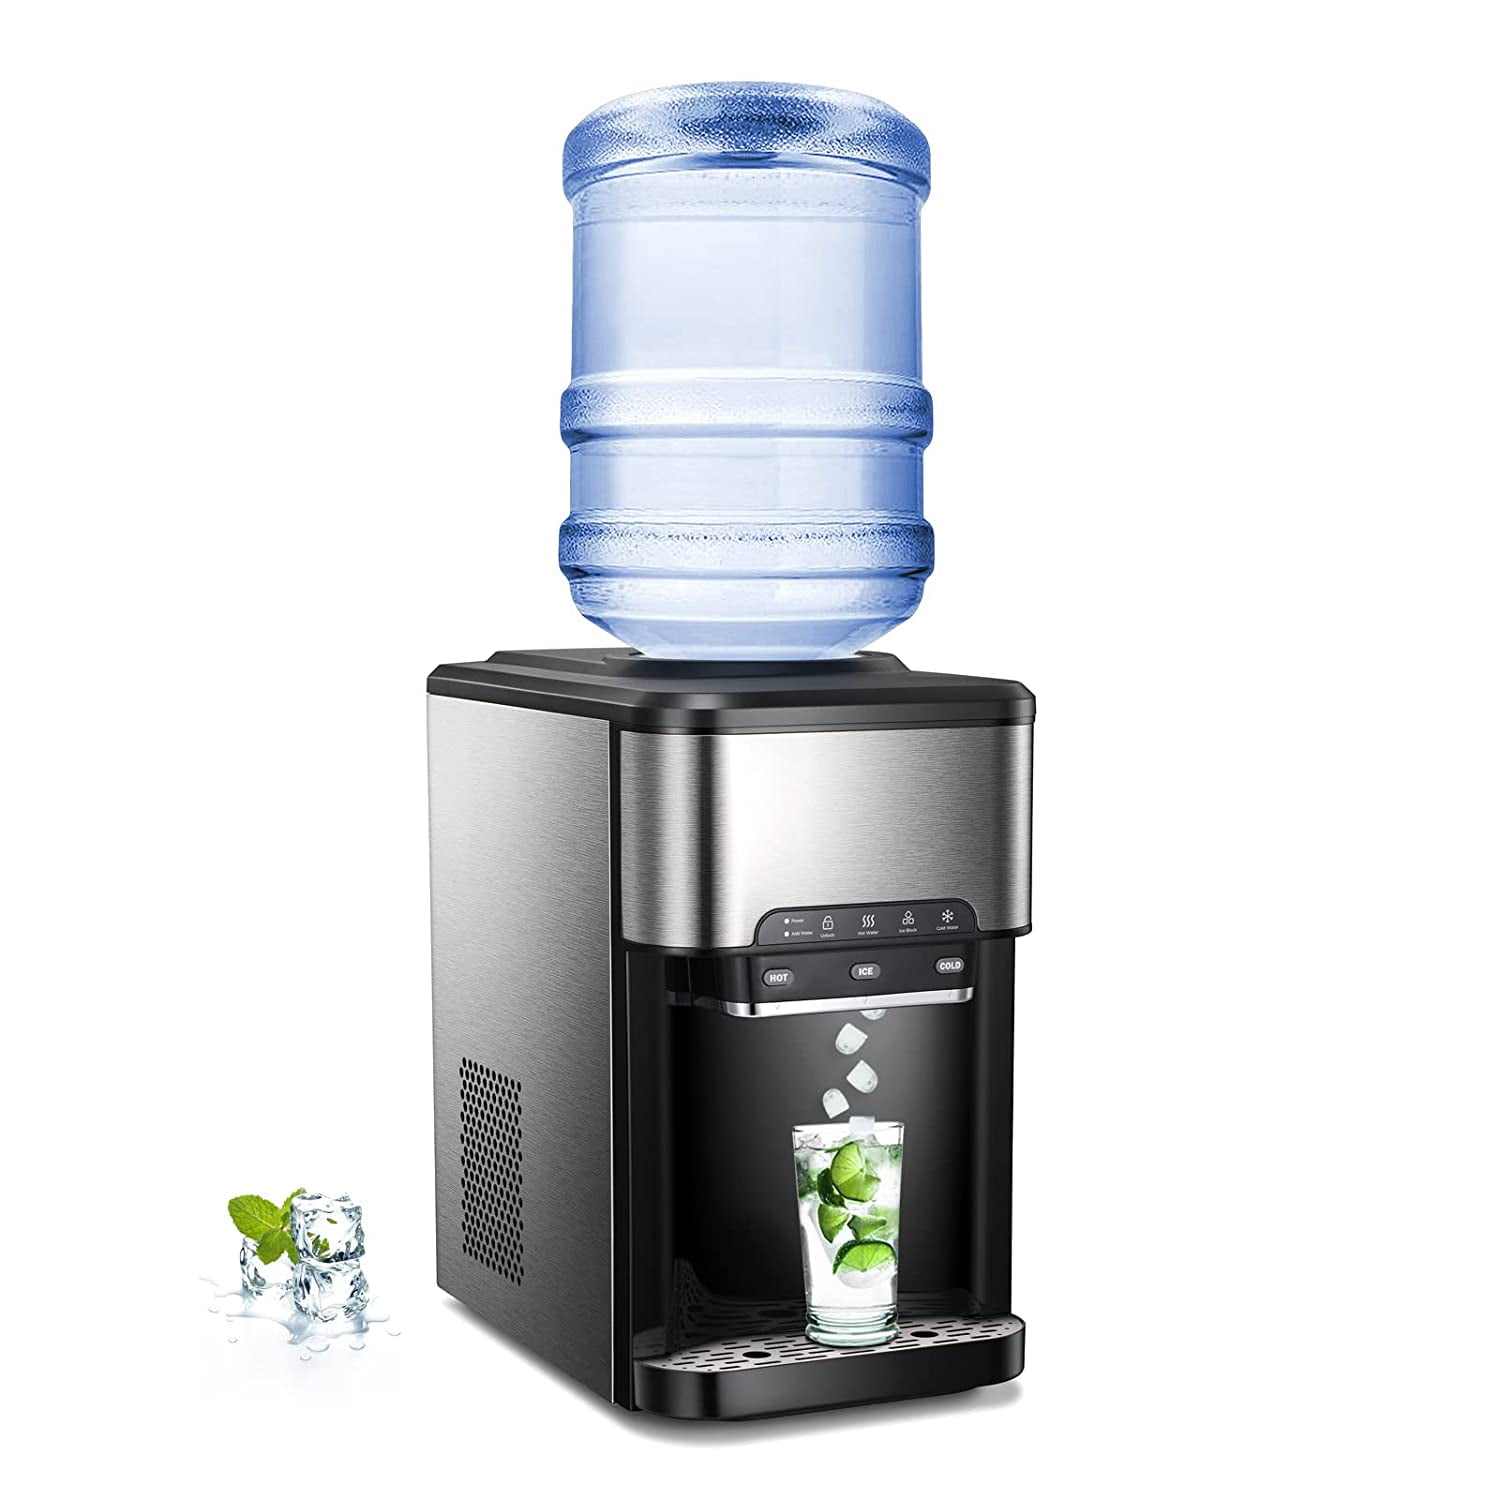 Bottled Water Coolers (Rental) – Hot/Cold